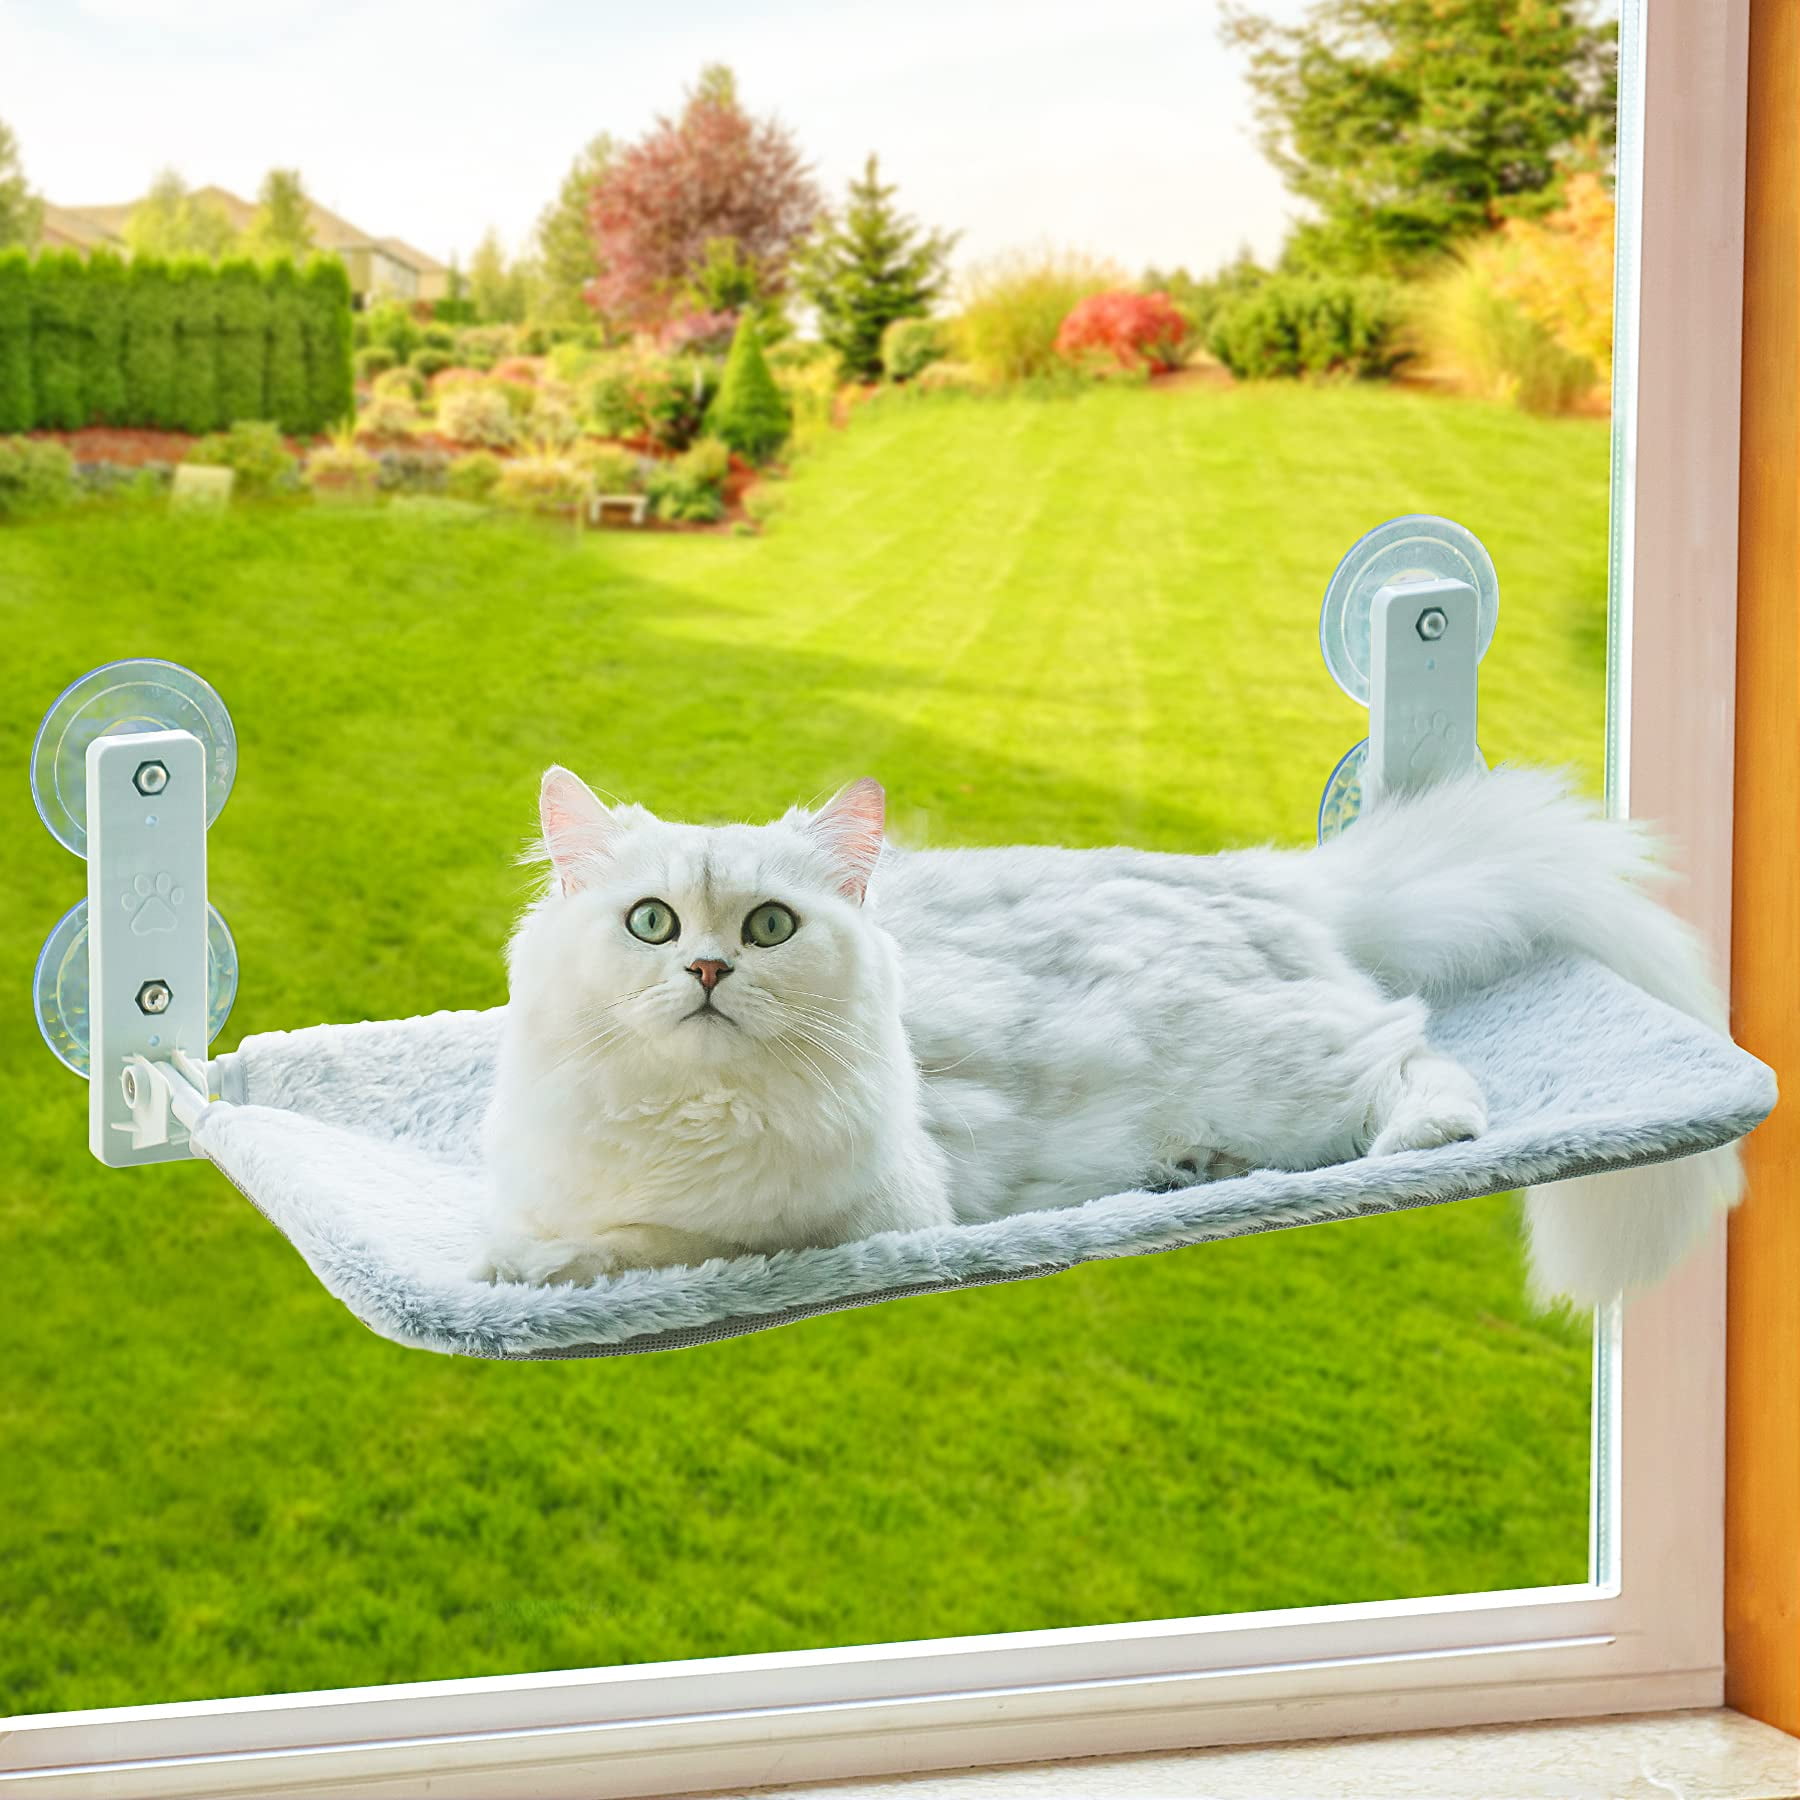 MEWOOFUN Cat Window Perch Sturdy Cat Window Hammock with Steel